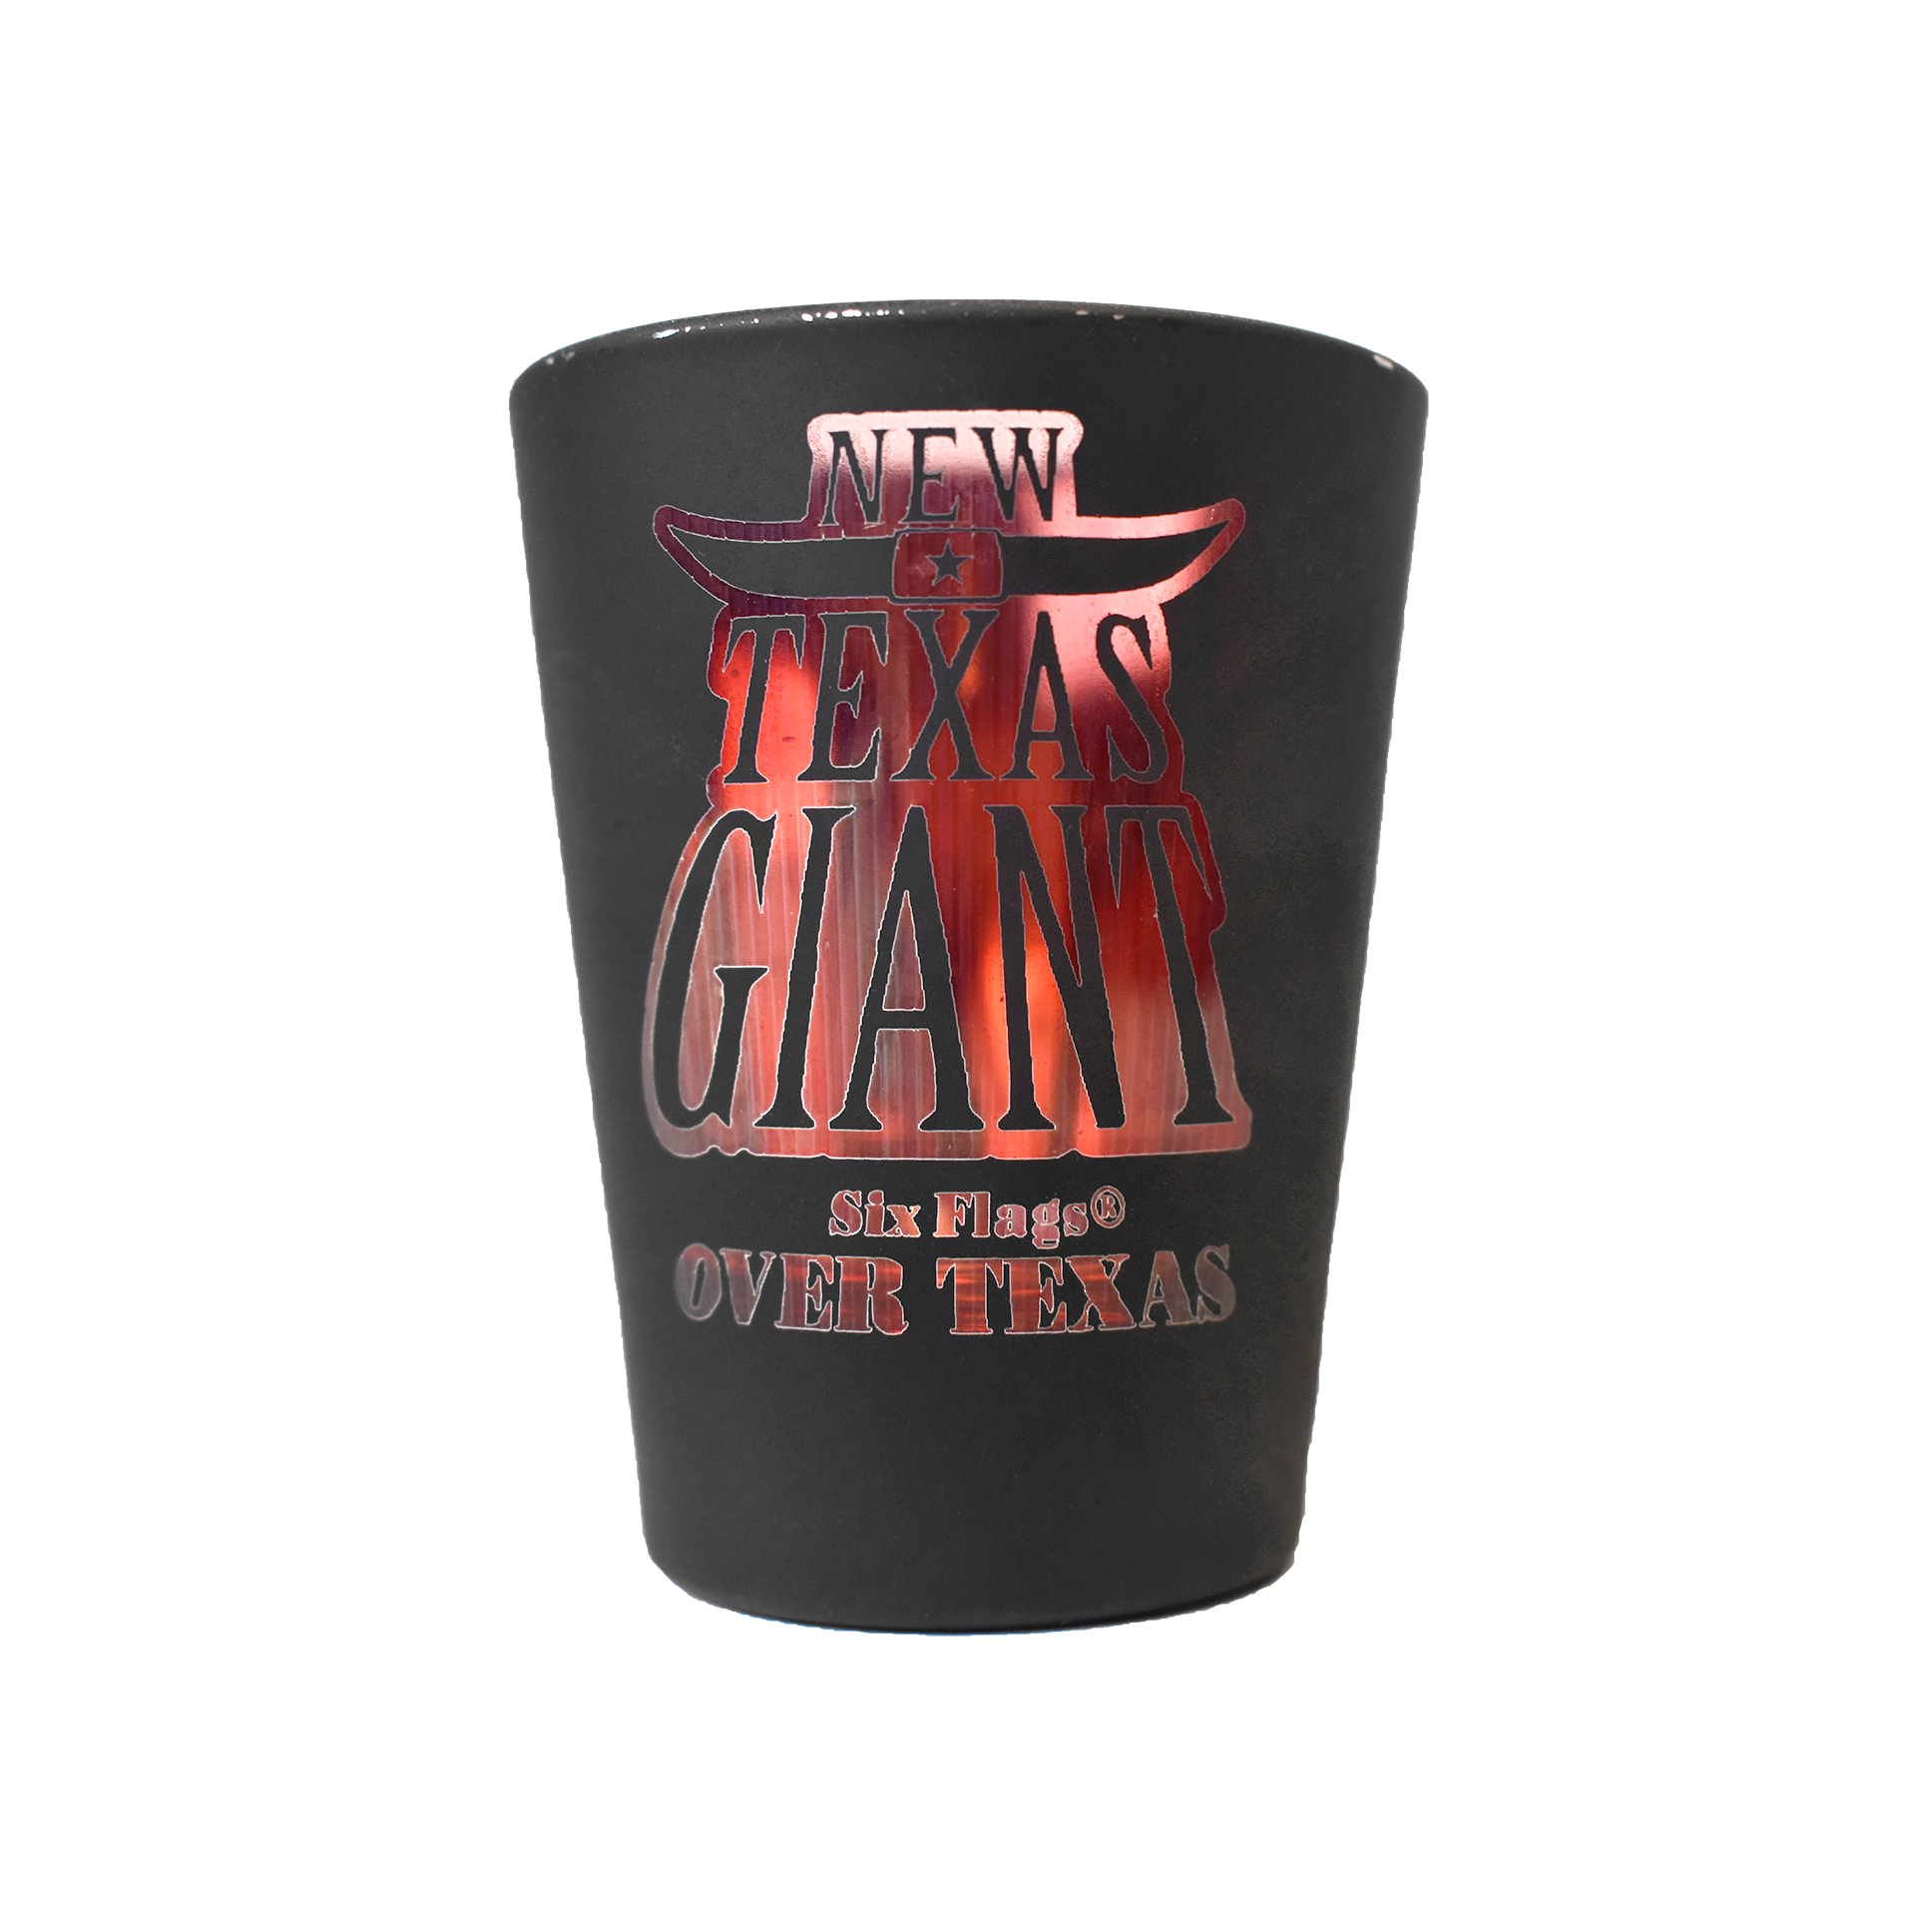 TEXAS GIANT MATTE BLACK SHOT GLASS (SIX FLAGS OVER TEXAS)